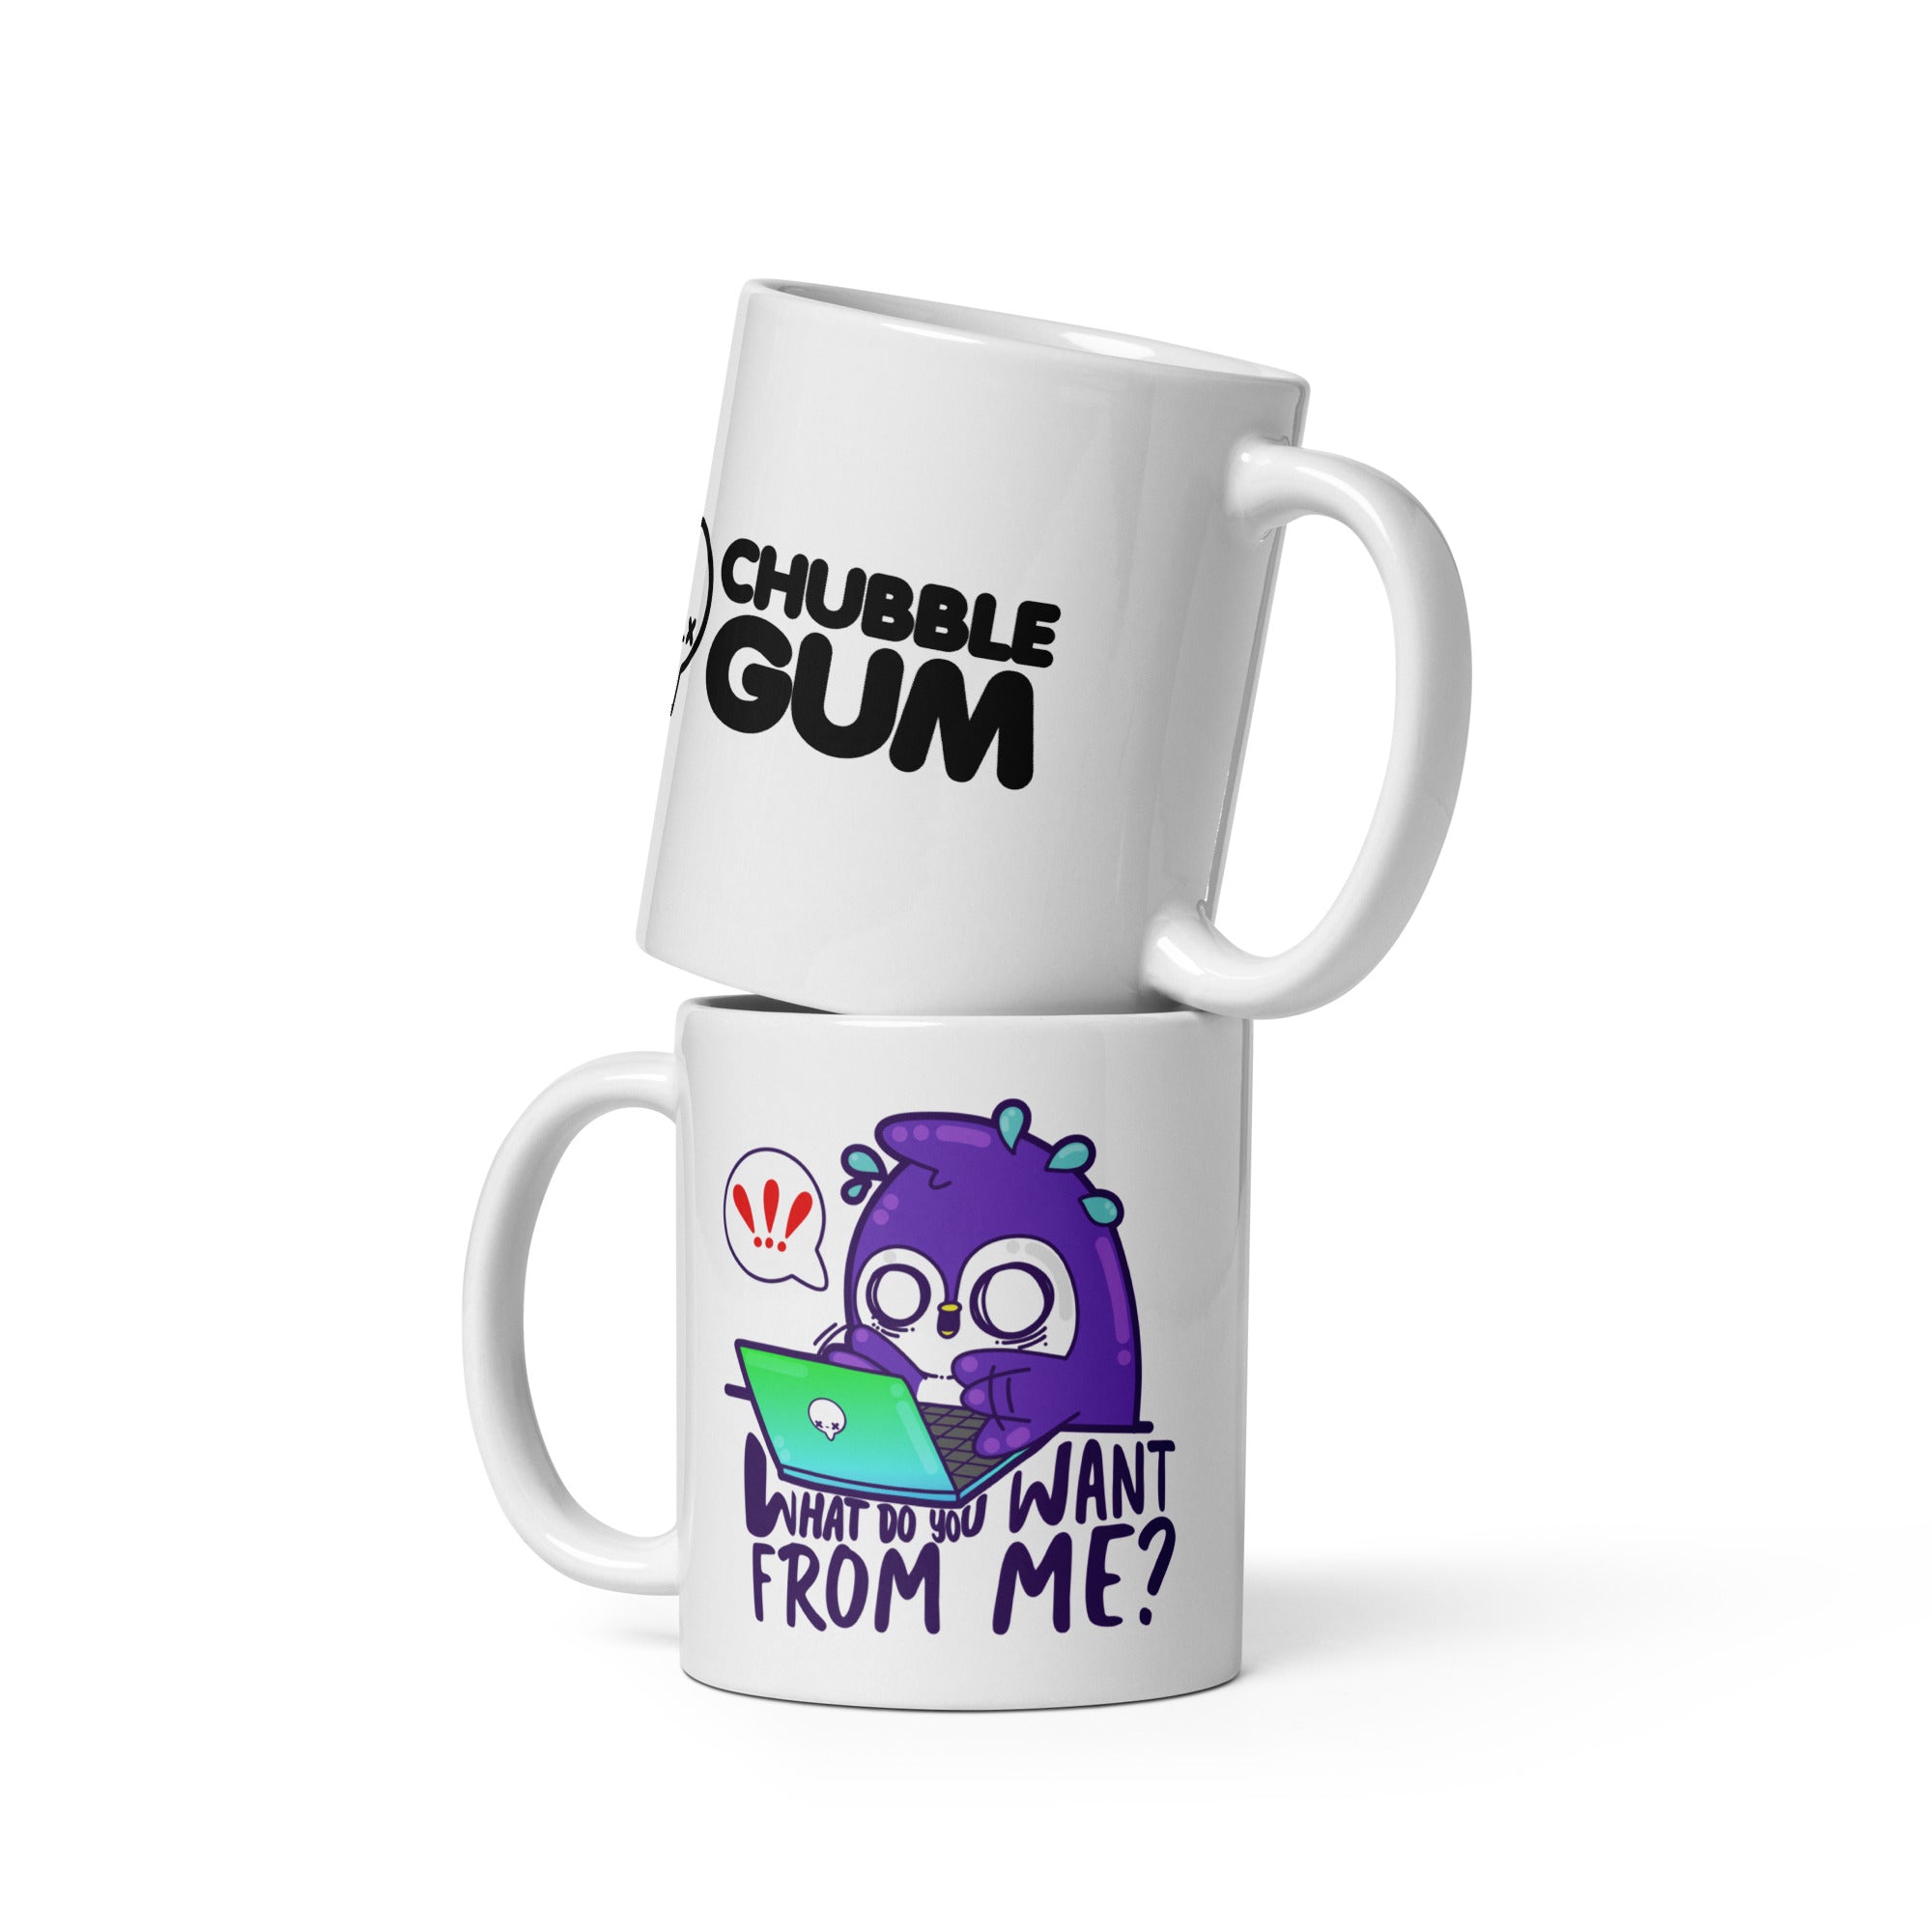 WHAT DO YOU WANT FROM ME - Coffee Mug - ChubbleGumLLC